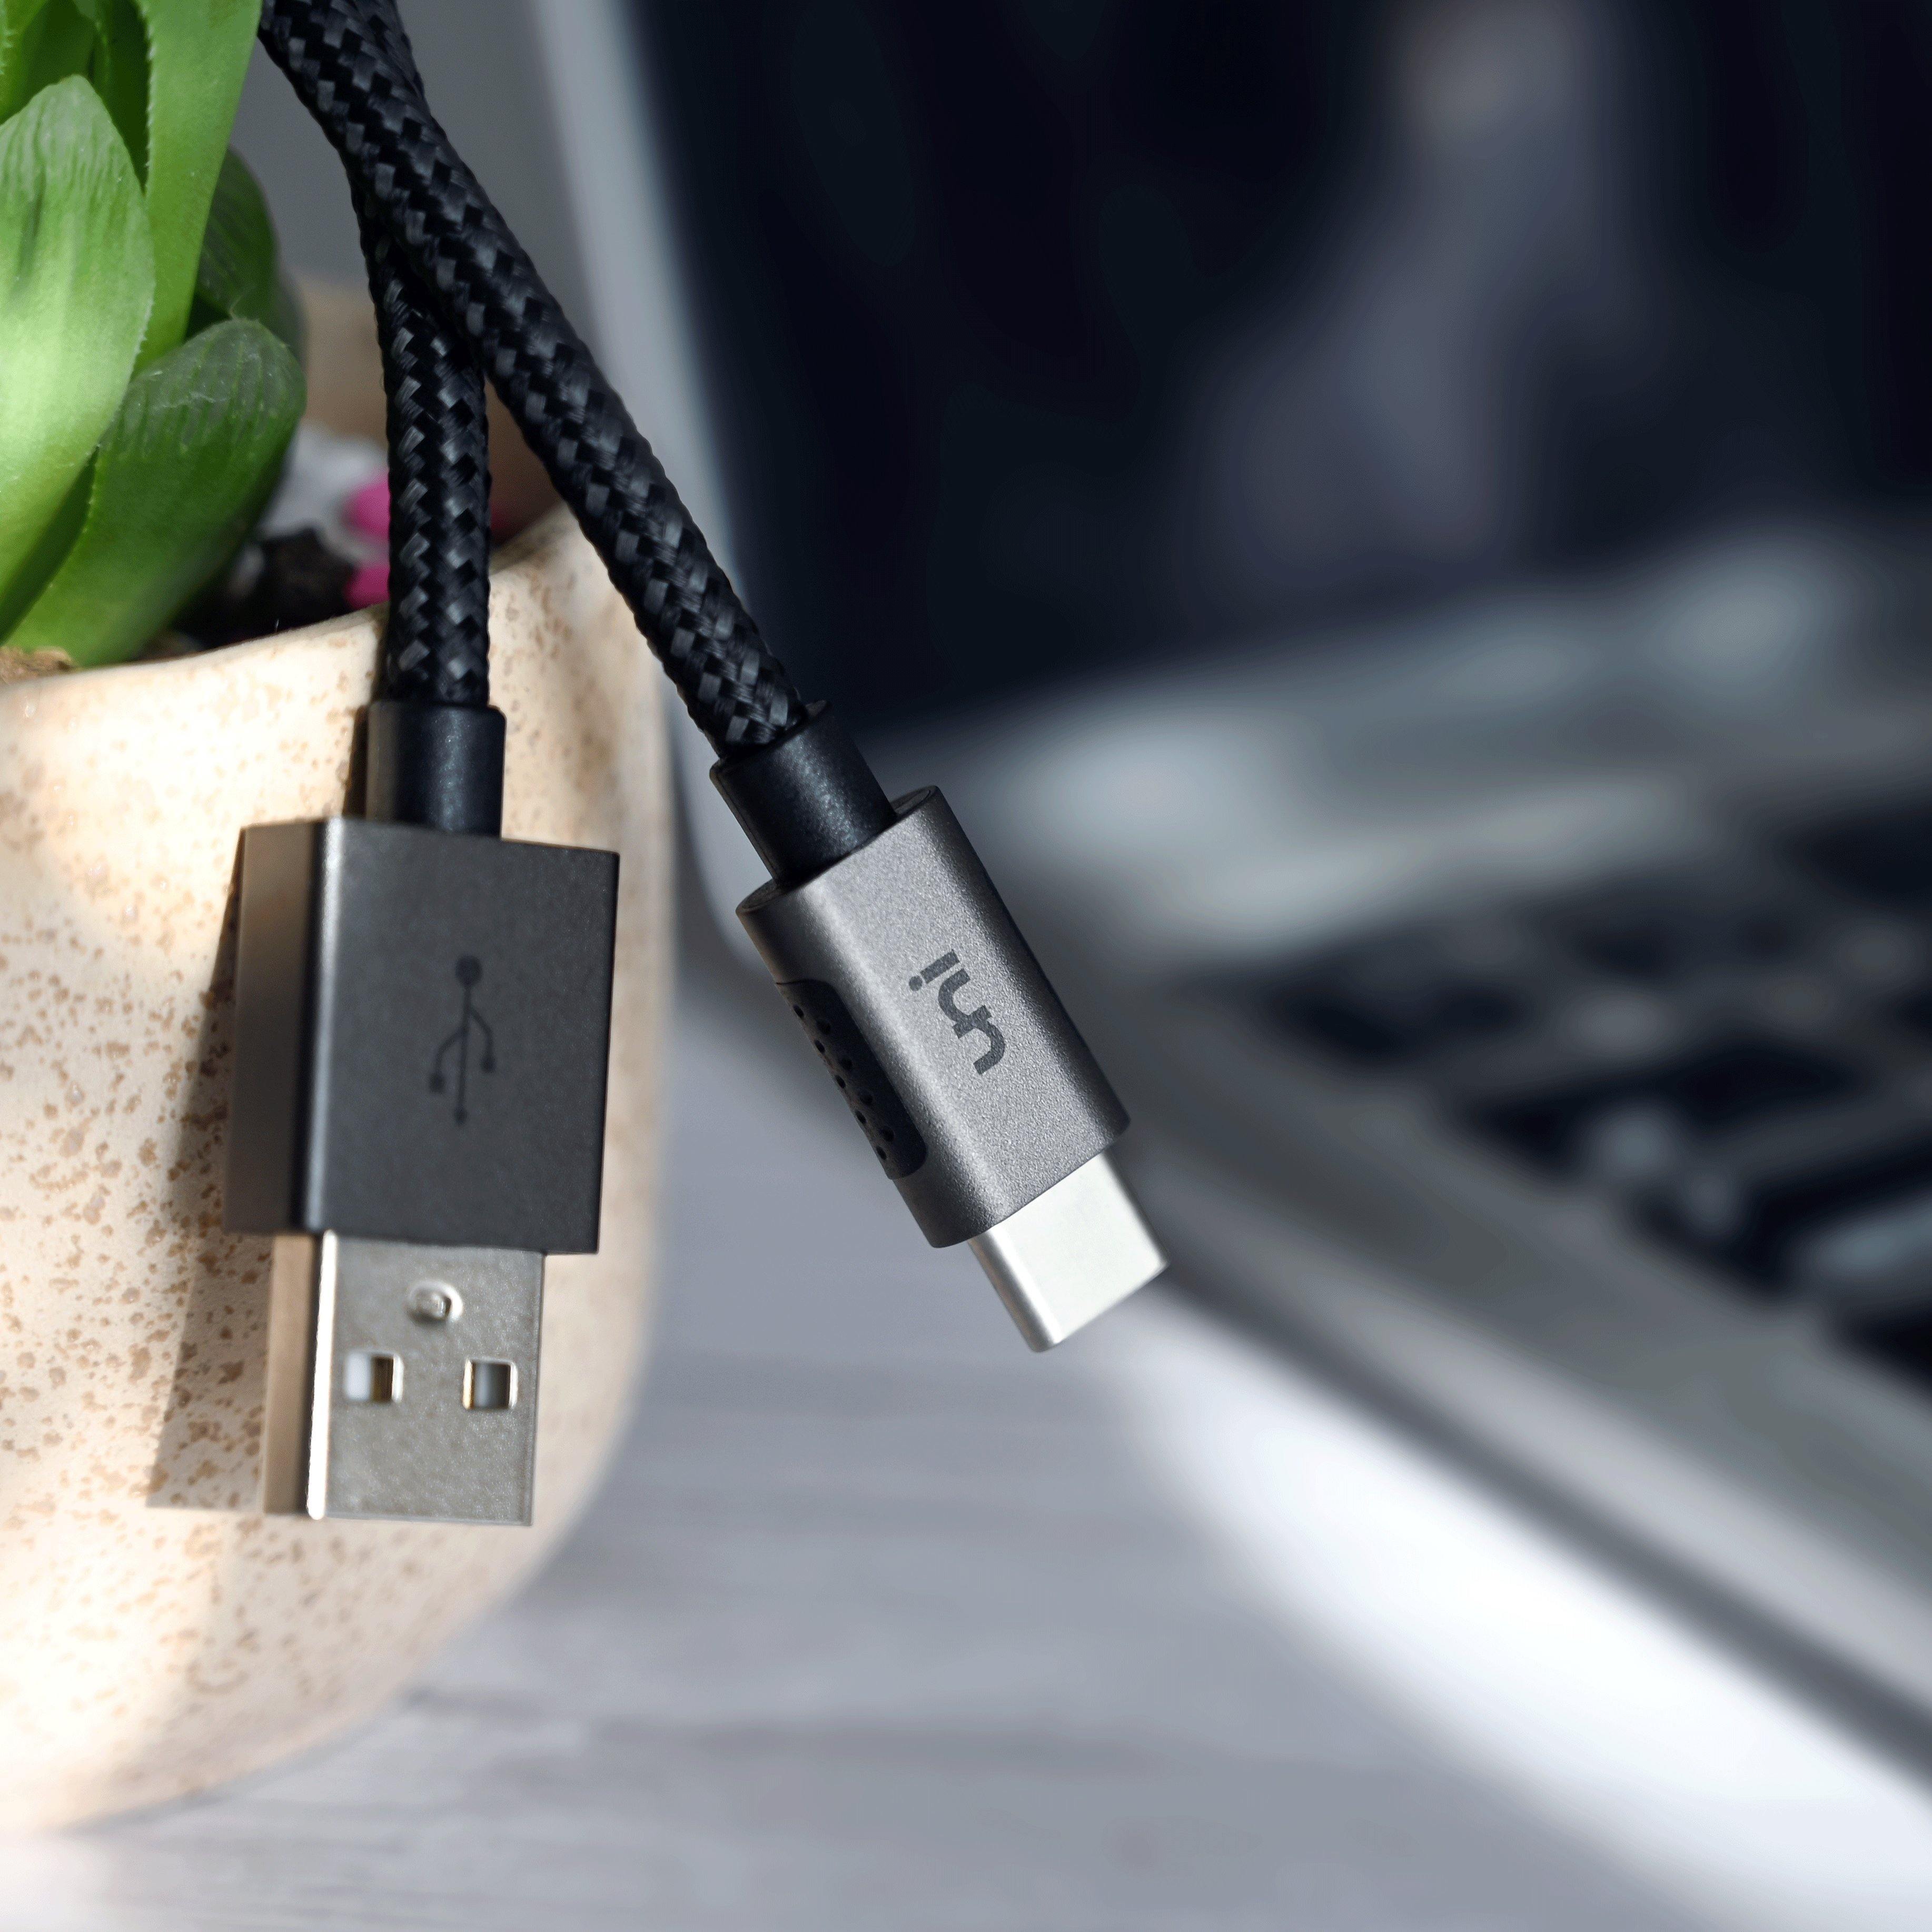 Cable de carga rápida uni® USB C, compatible universal